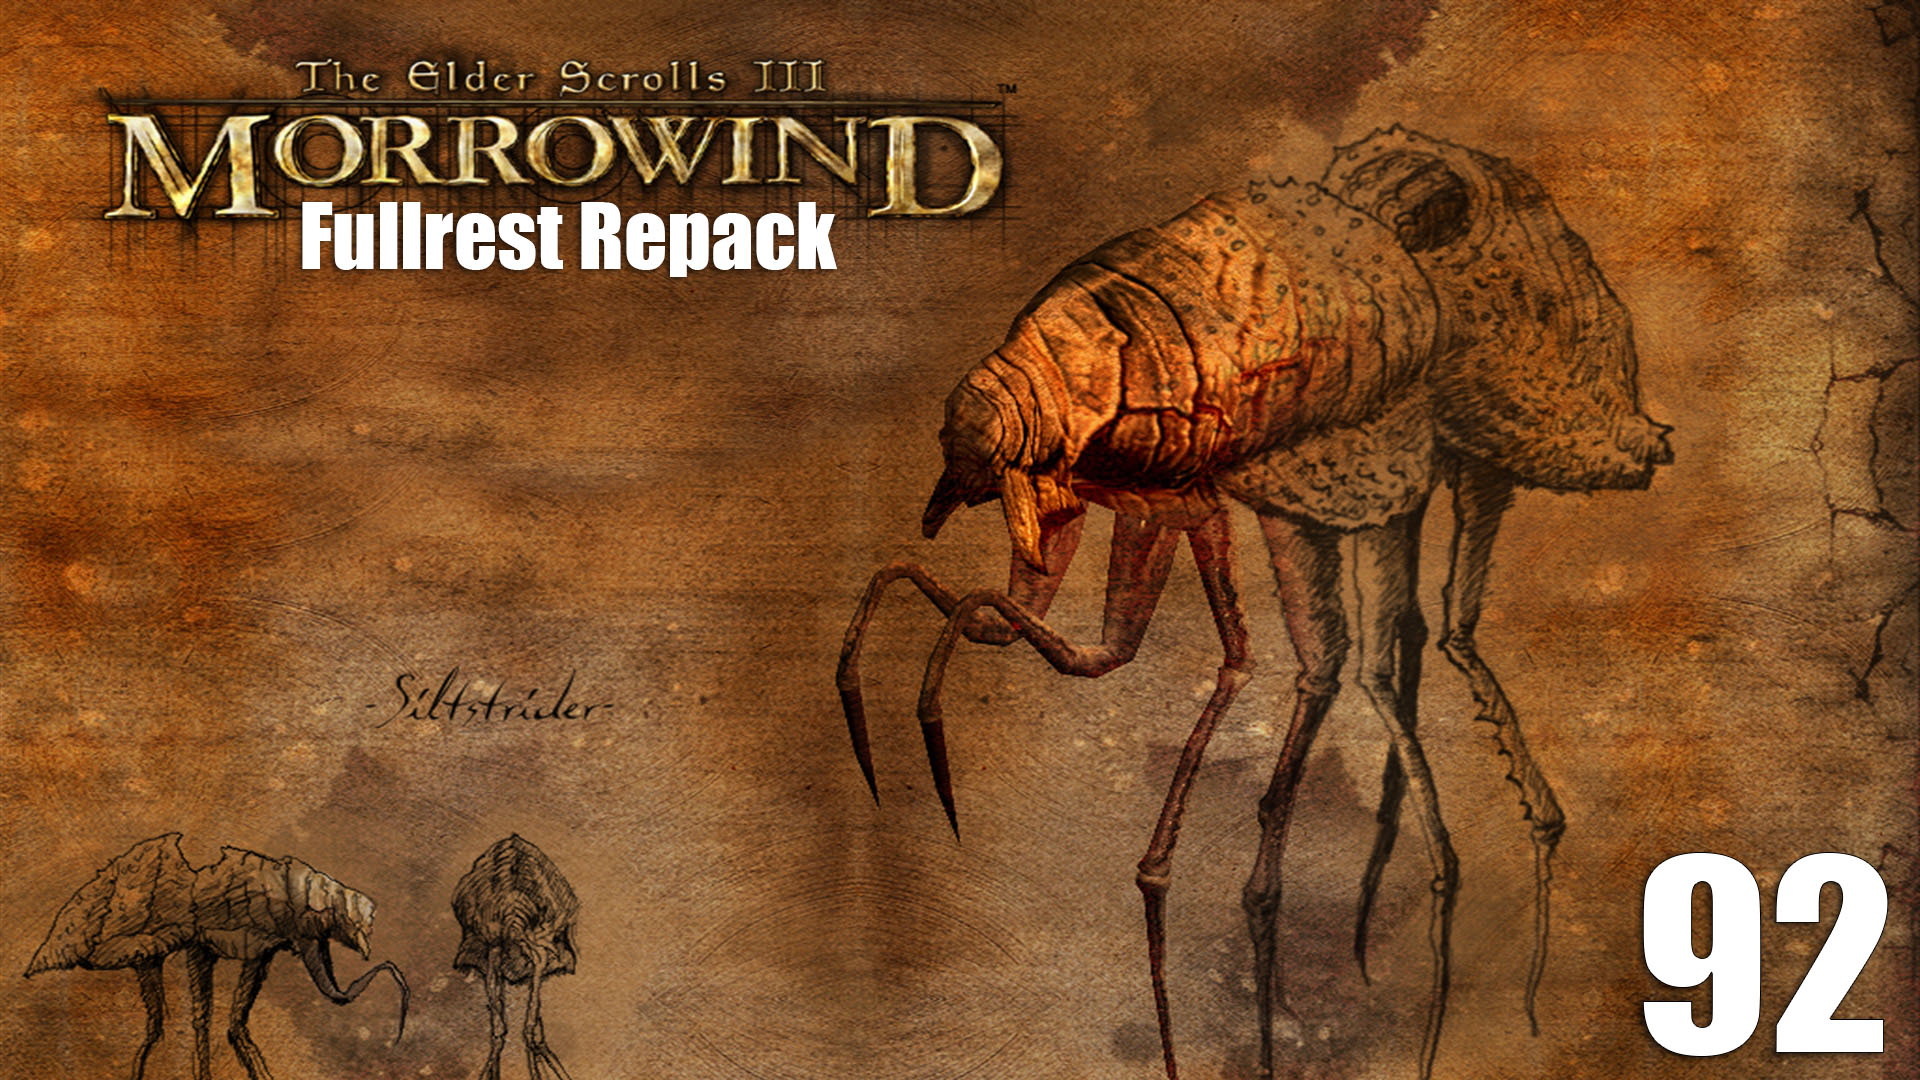 The Elder Scrolls III: MORROWIND Fullrest #92 Книги для Гильдии магов Альд'руна.